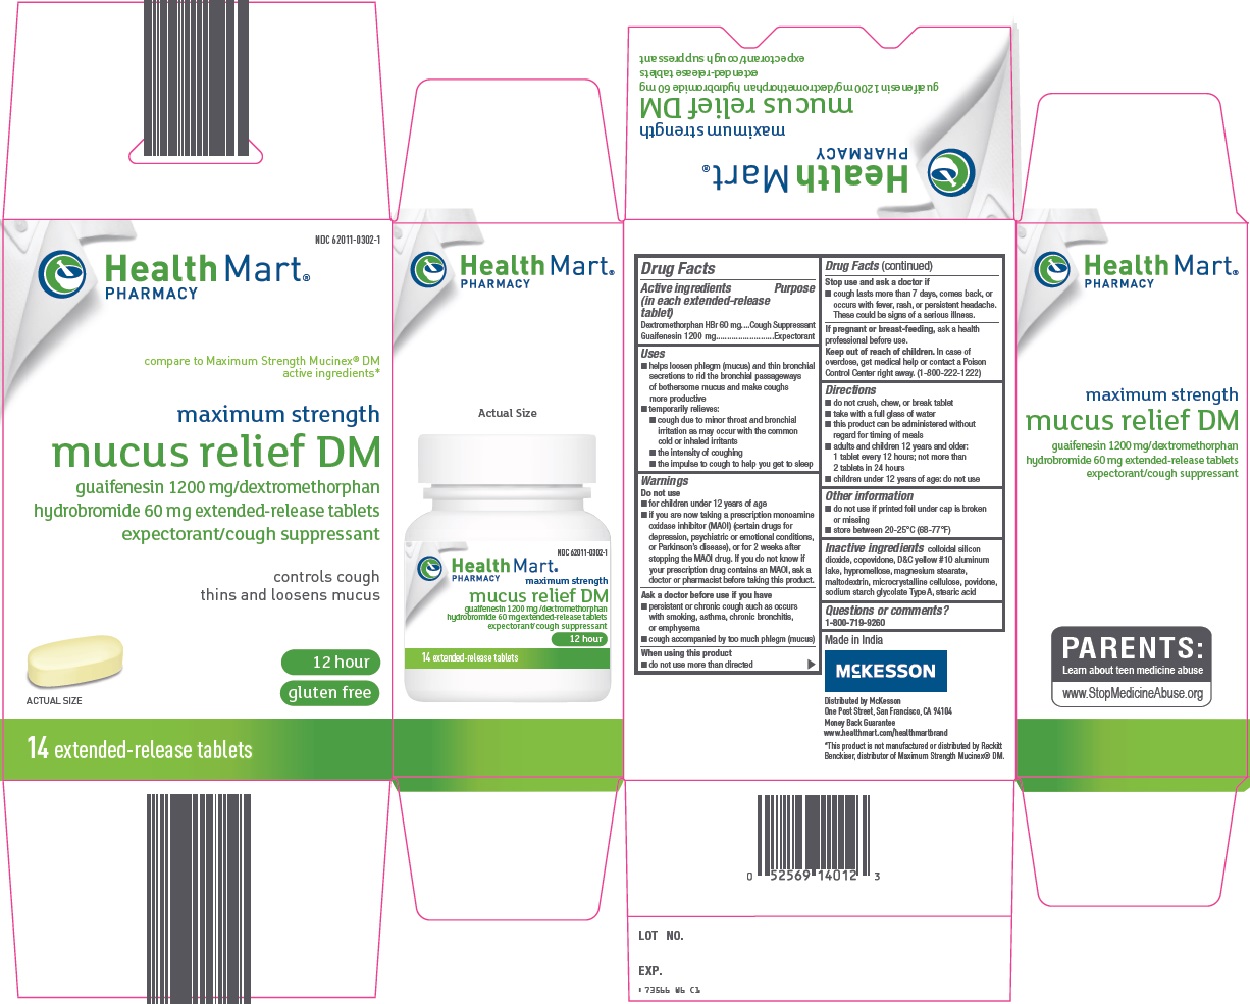 Health Mart Pharmacy Mucus Relief DM image